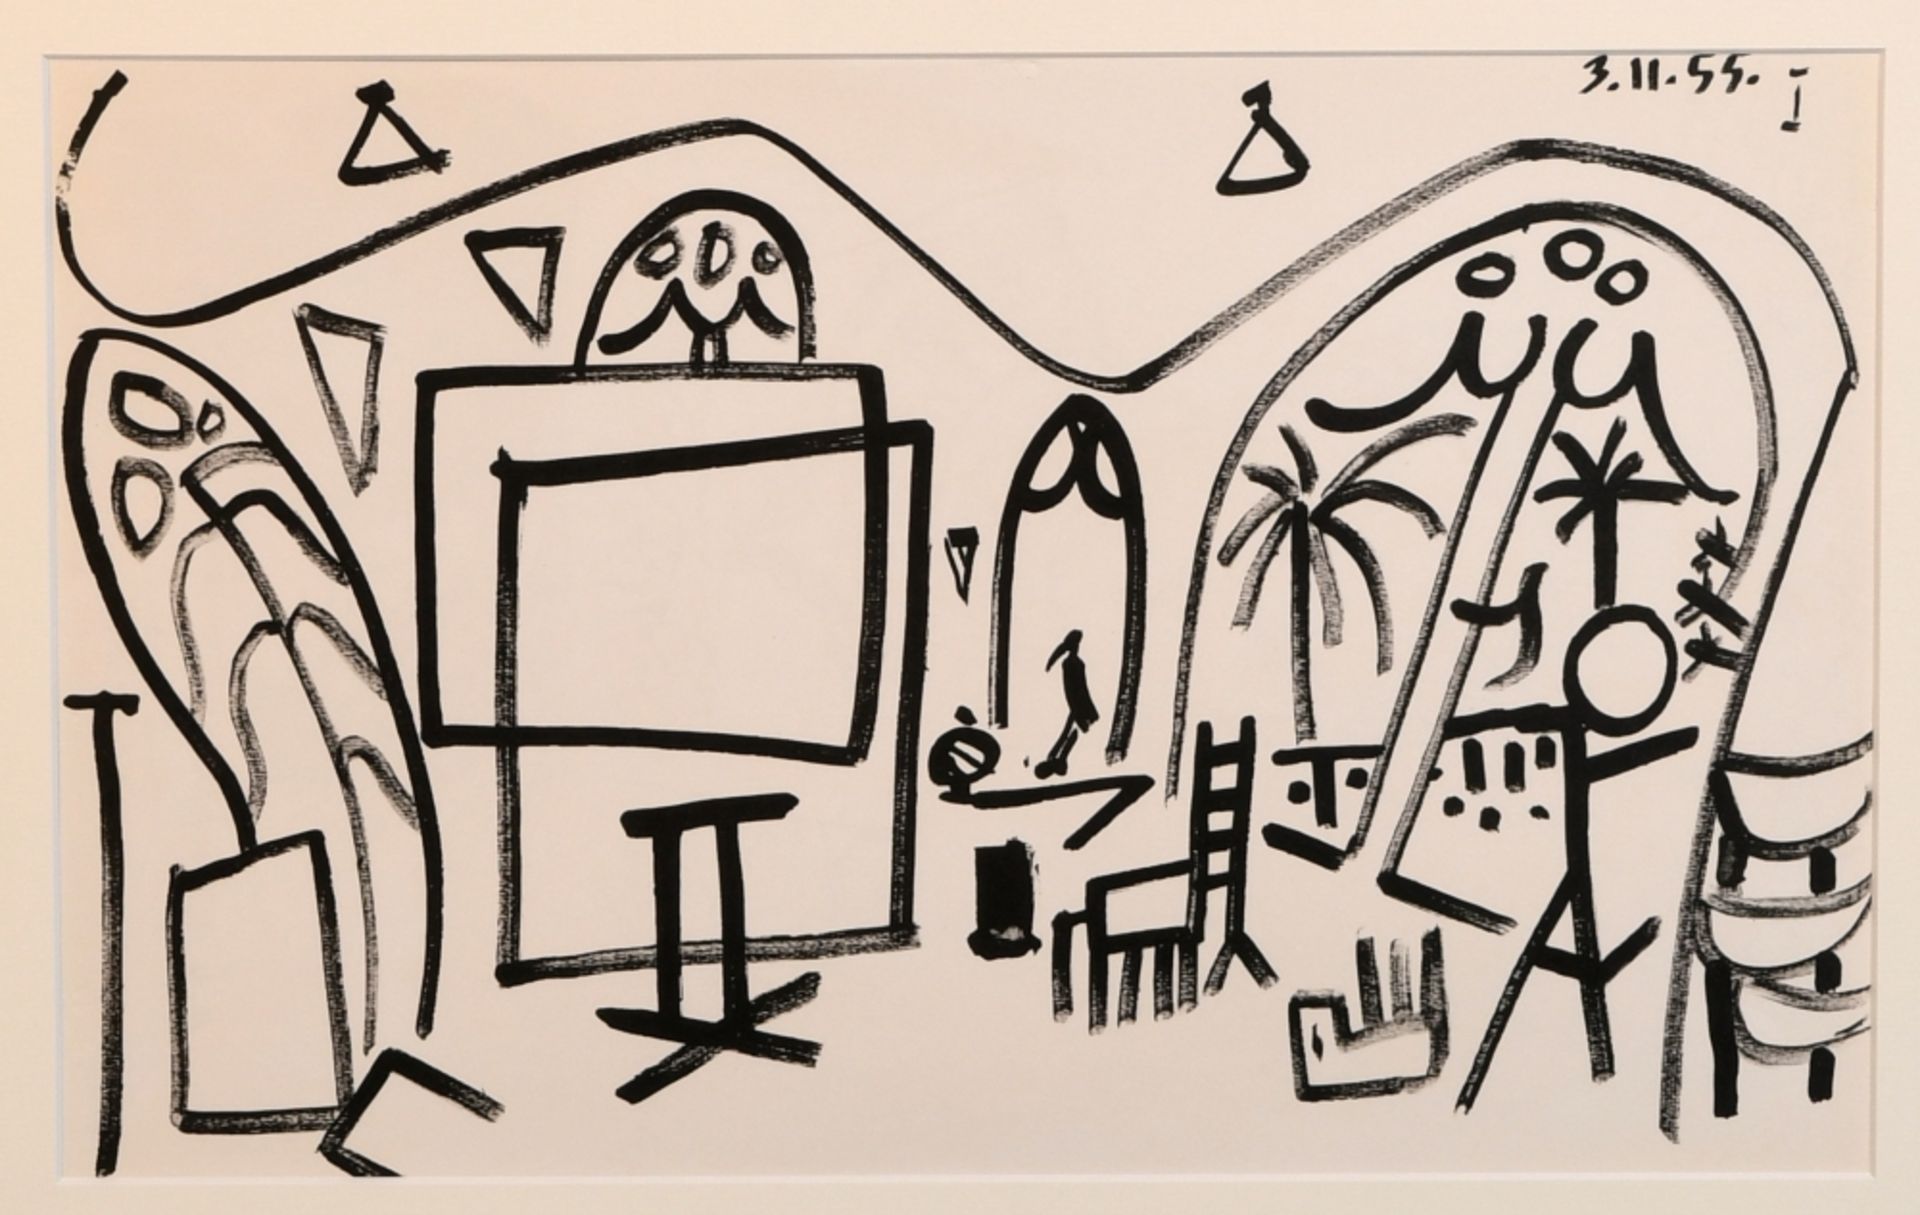 Picasso, Pablo,  1881 Malaga - 1973 Mougins